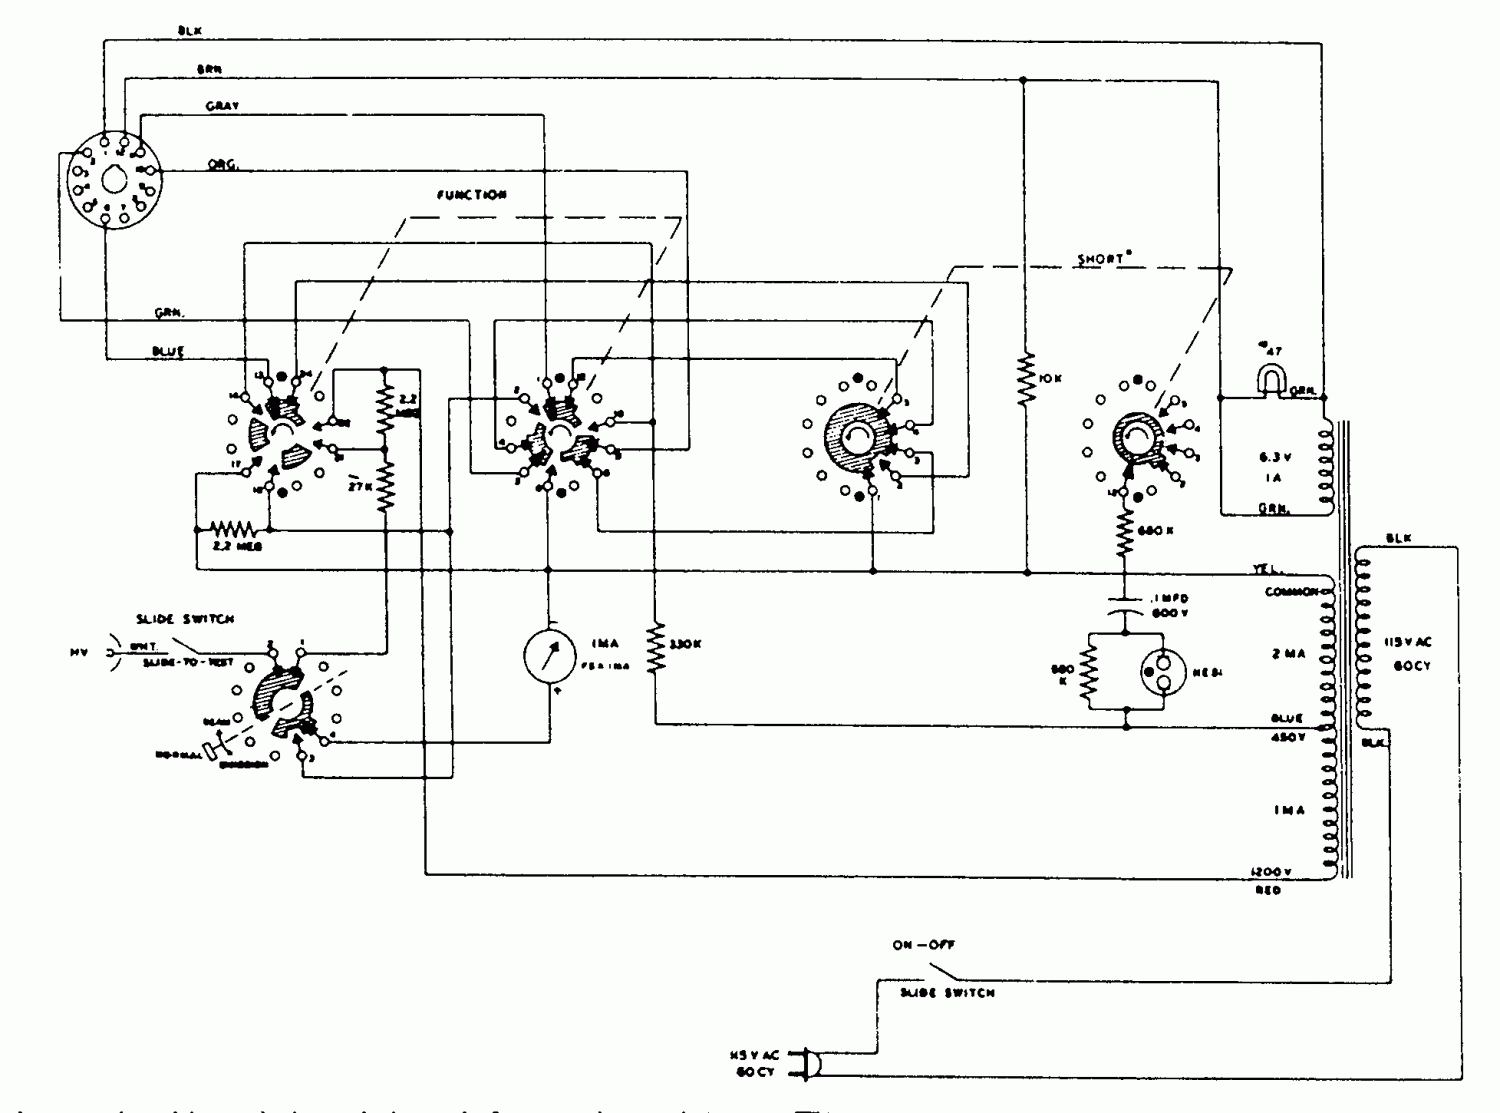 Heathkit CC-1 CRT Checker - Schematic Diagram